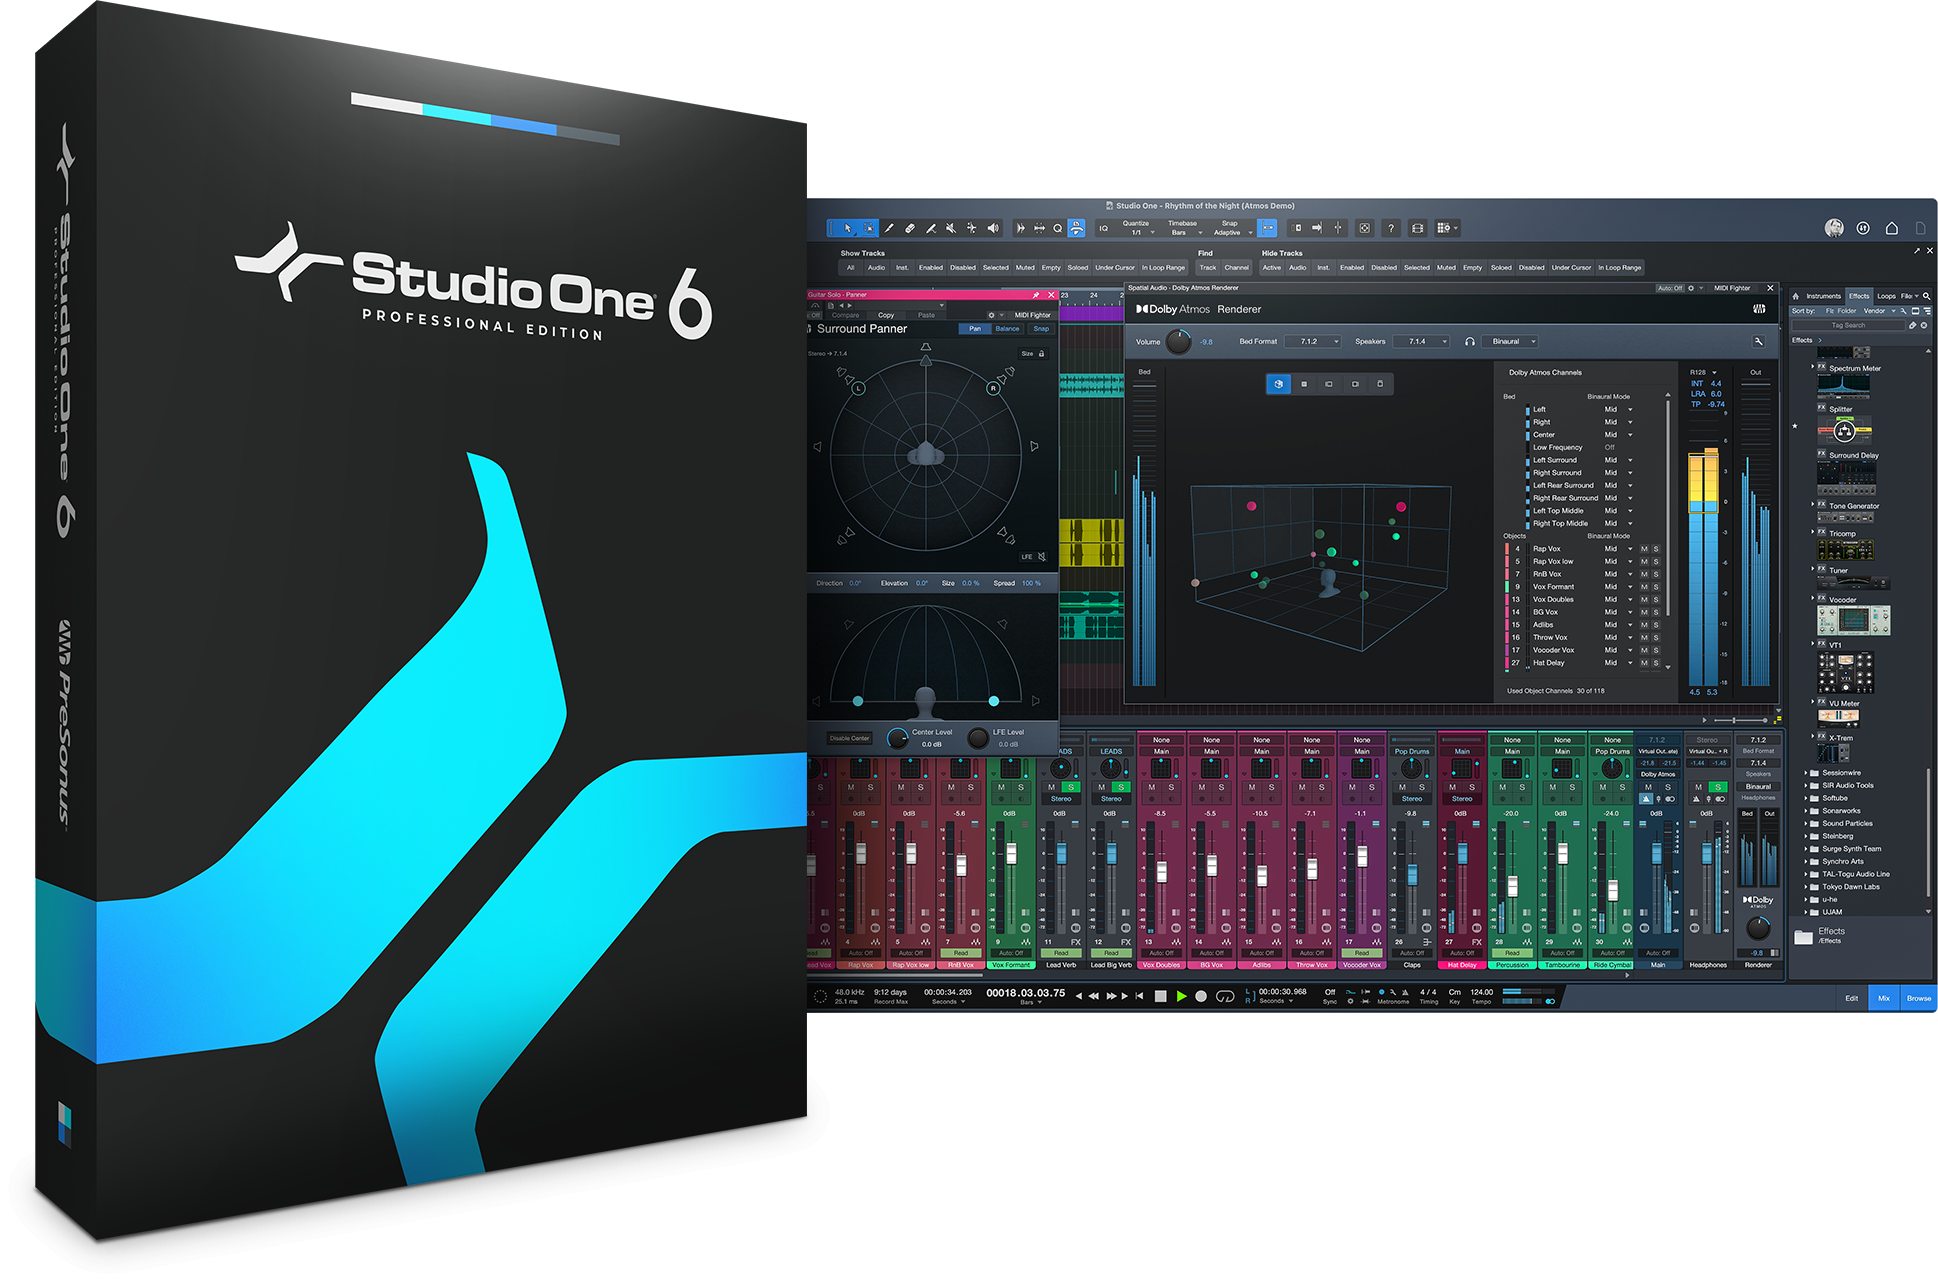 Presonus Studio One 6.5 Professional